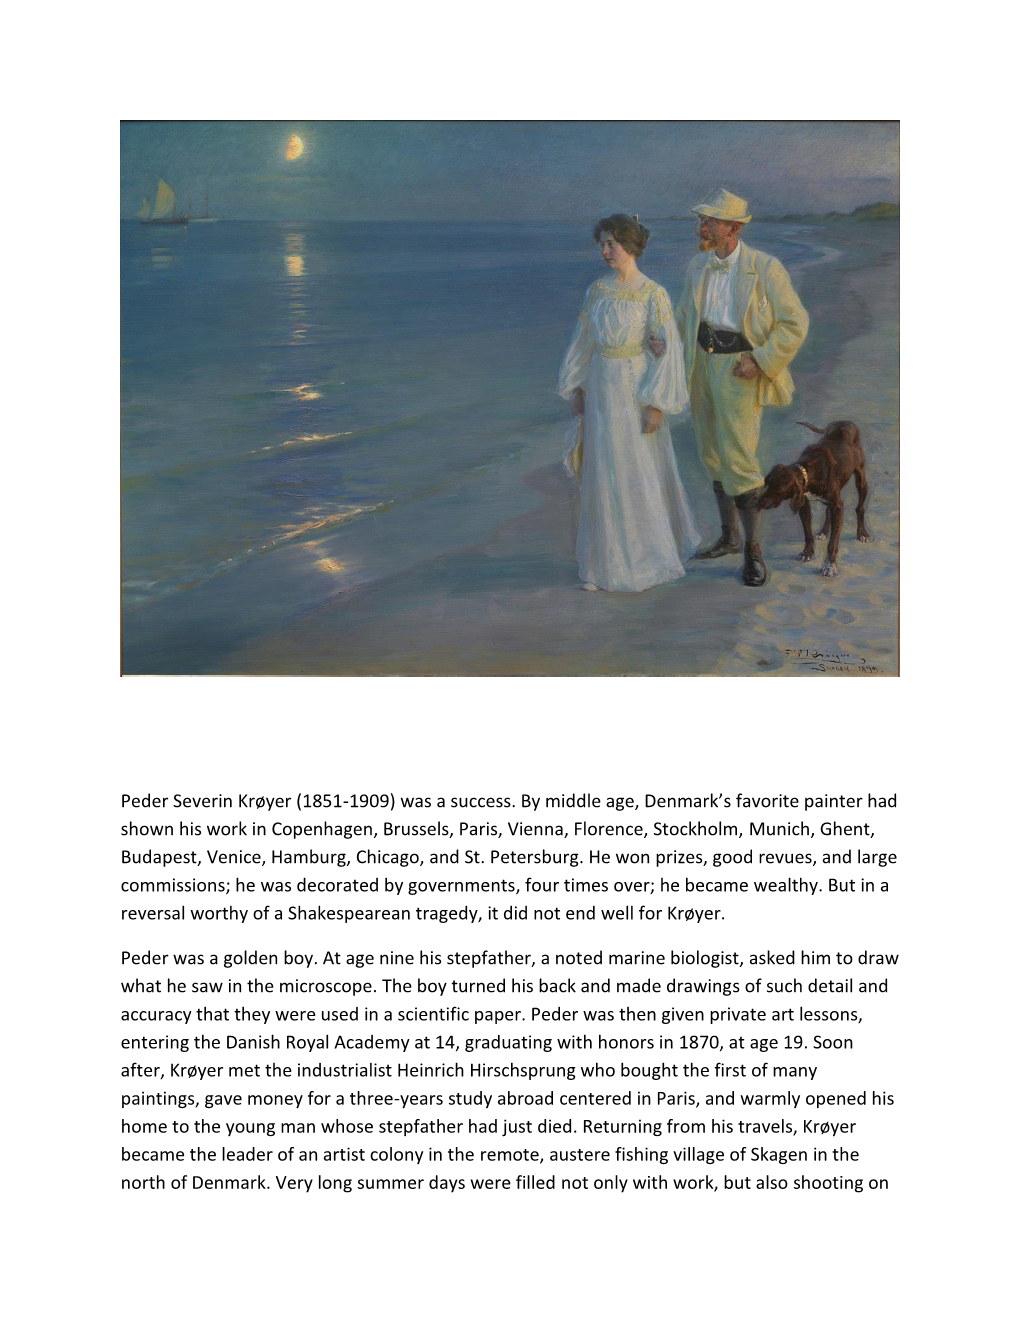 Peder Severin Krøyer (1851-1909) Was a Success